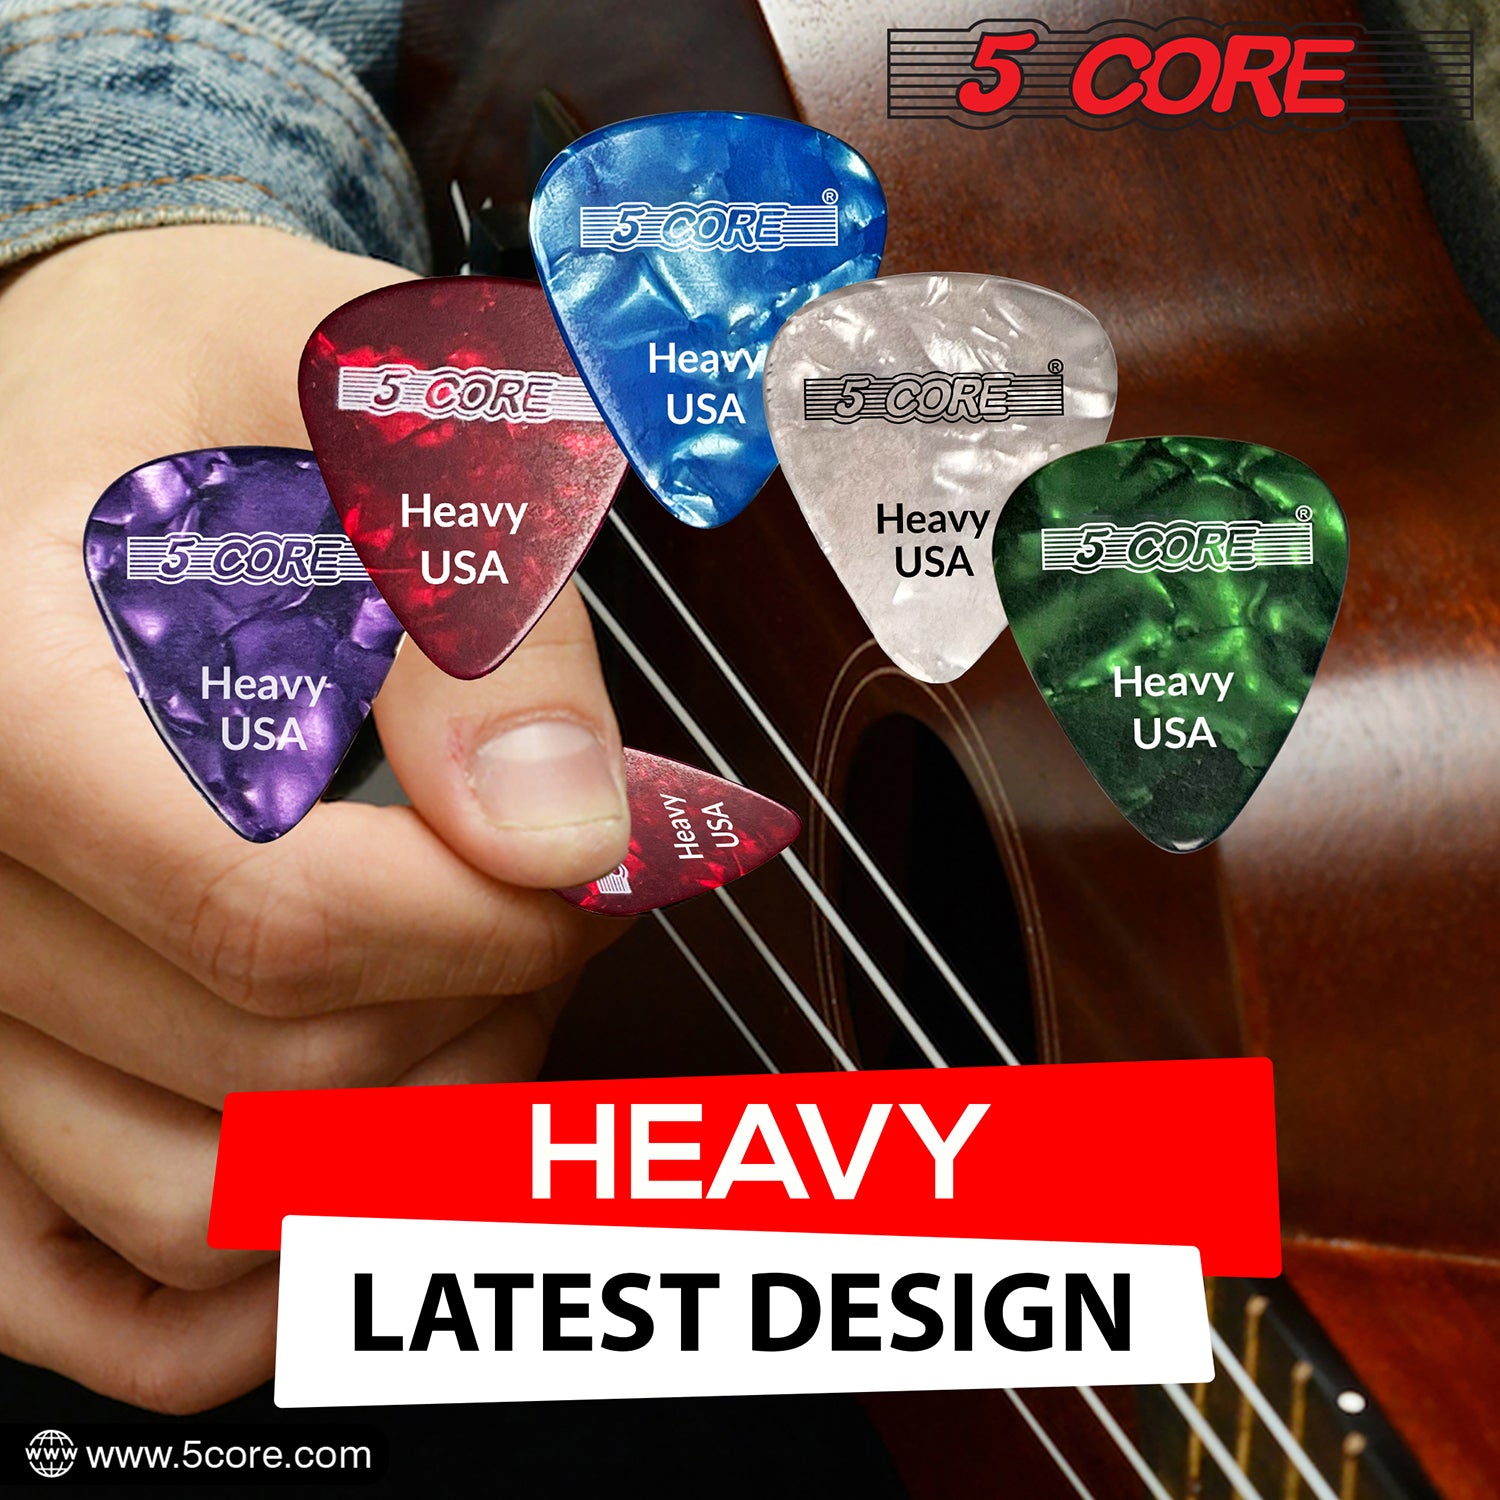 5 Core Celluloid Guitar Picks 12 Pack  Heavy Gauge Plectrums  for Acoustic Electric Bass Guitars